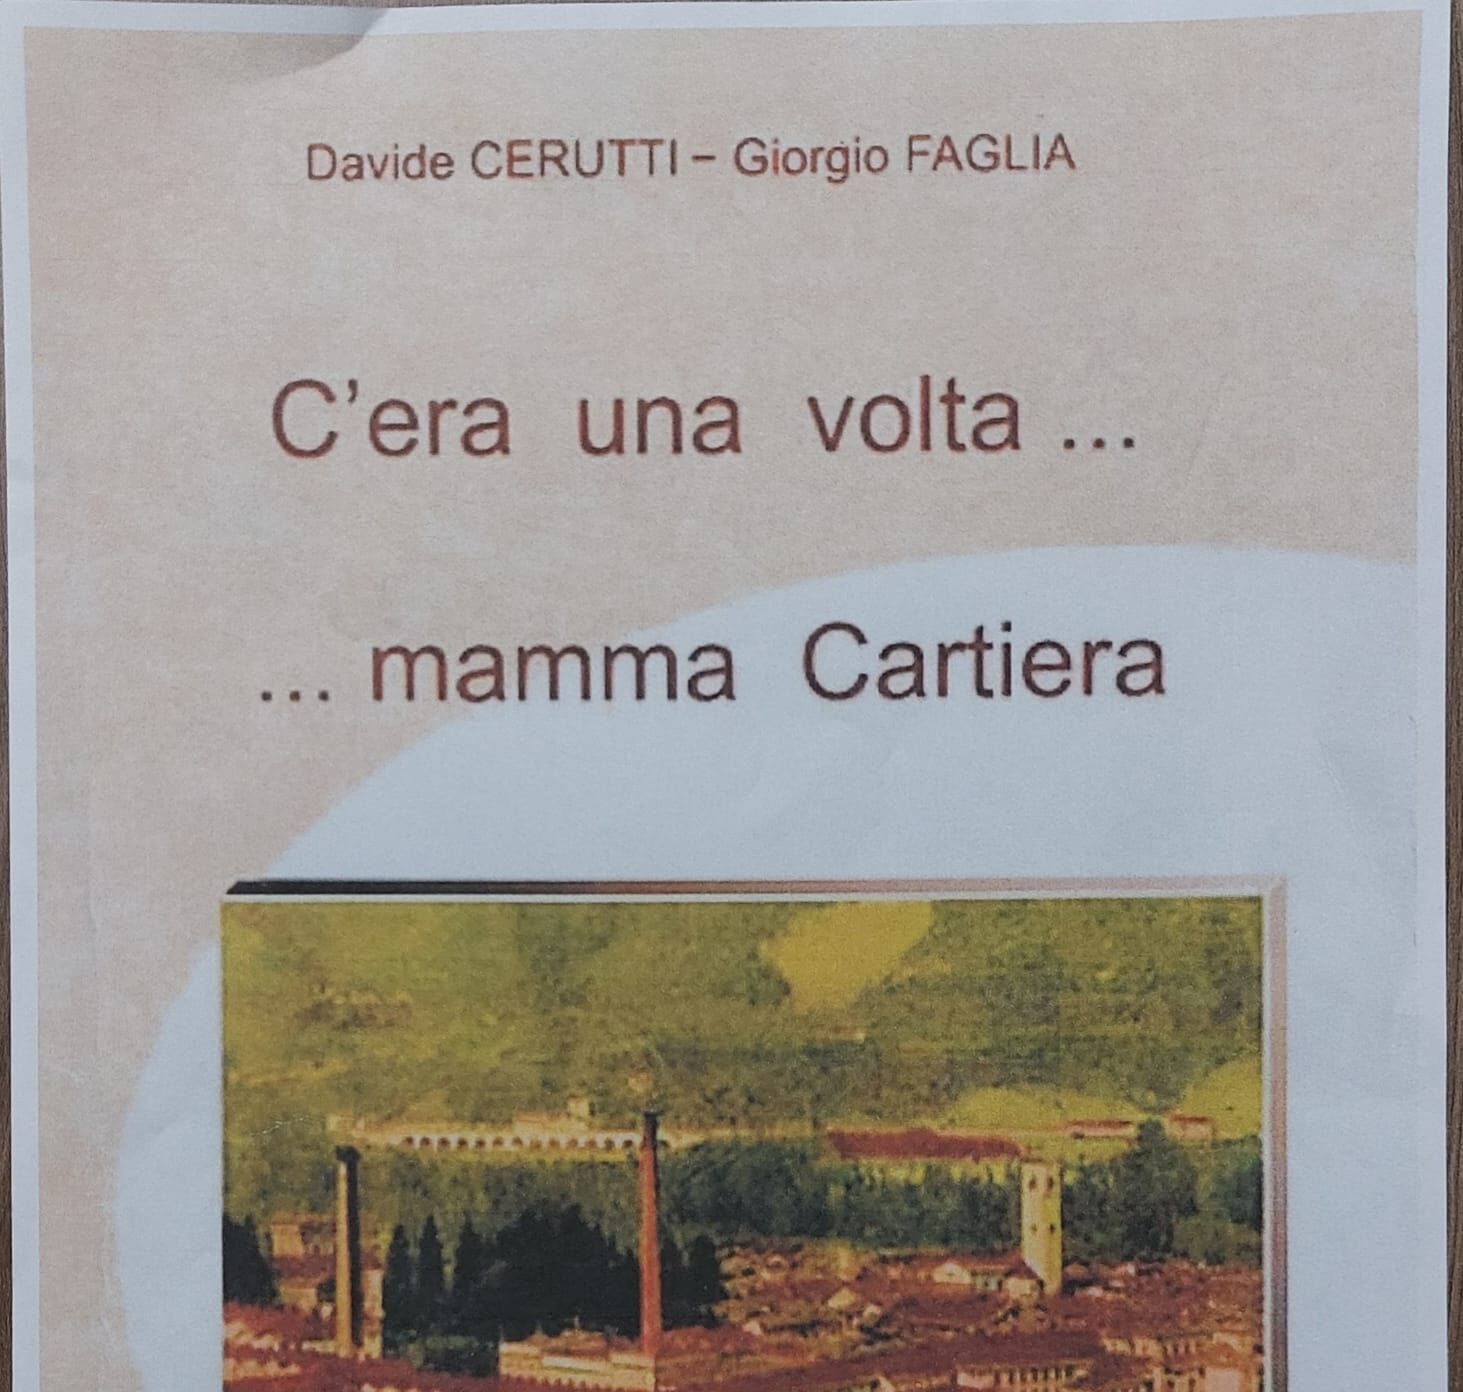 «C’era una volta... mamma Cartiera», un nuovo libro dedicato alla Cartiera Italiana